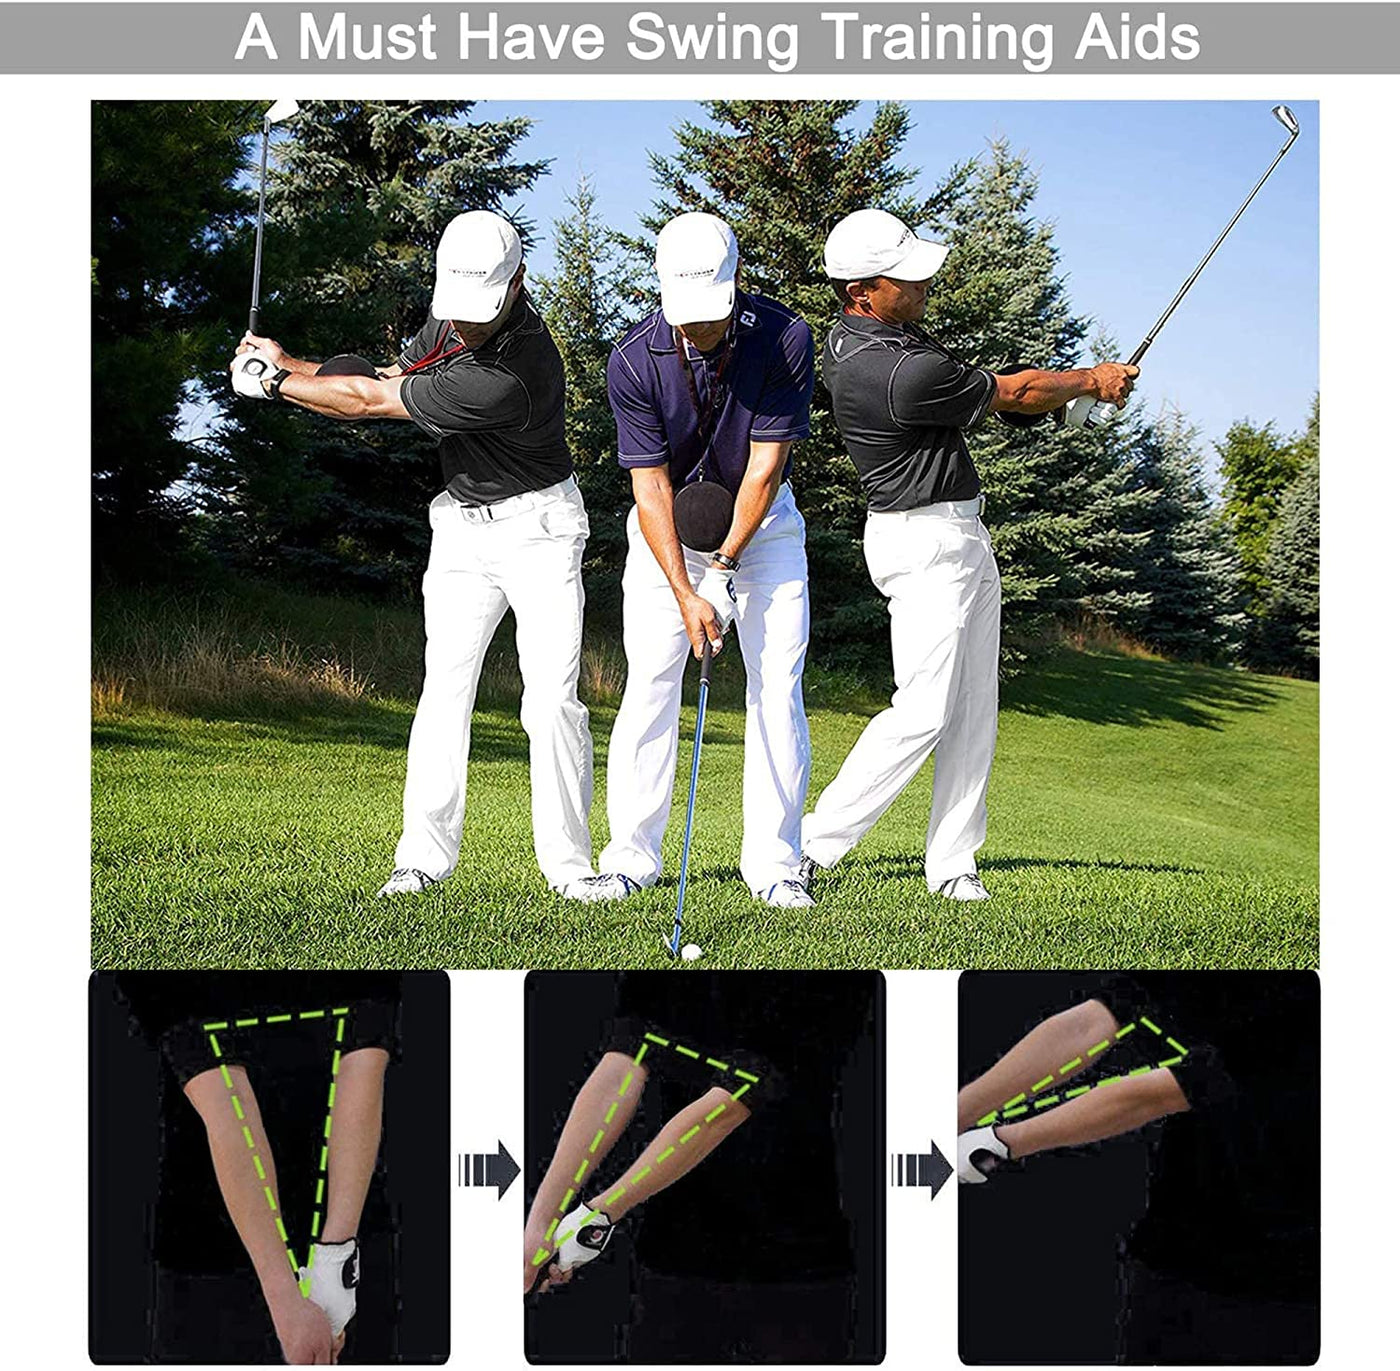 Golf Swing Trainer Ball Wrist Armband Set